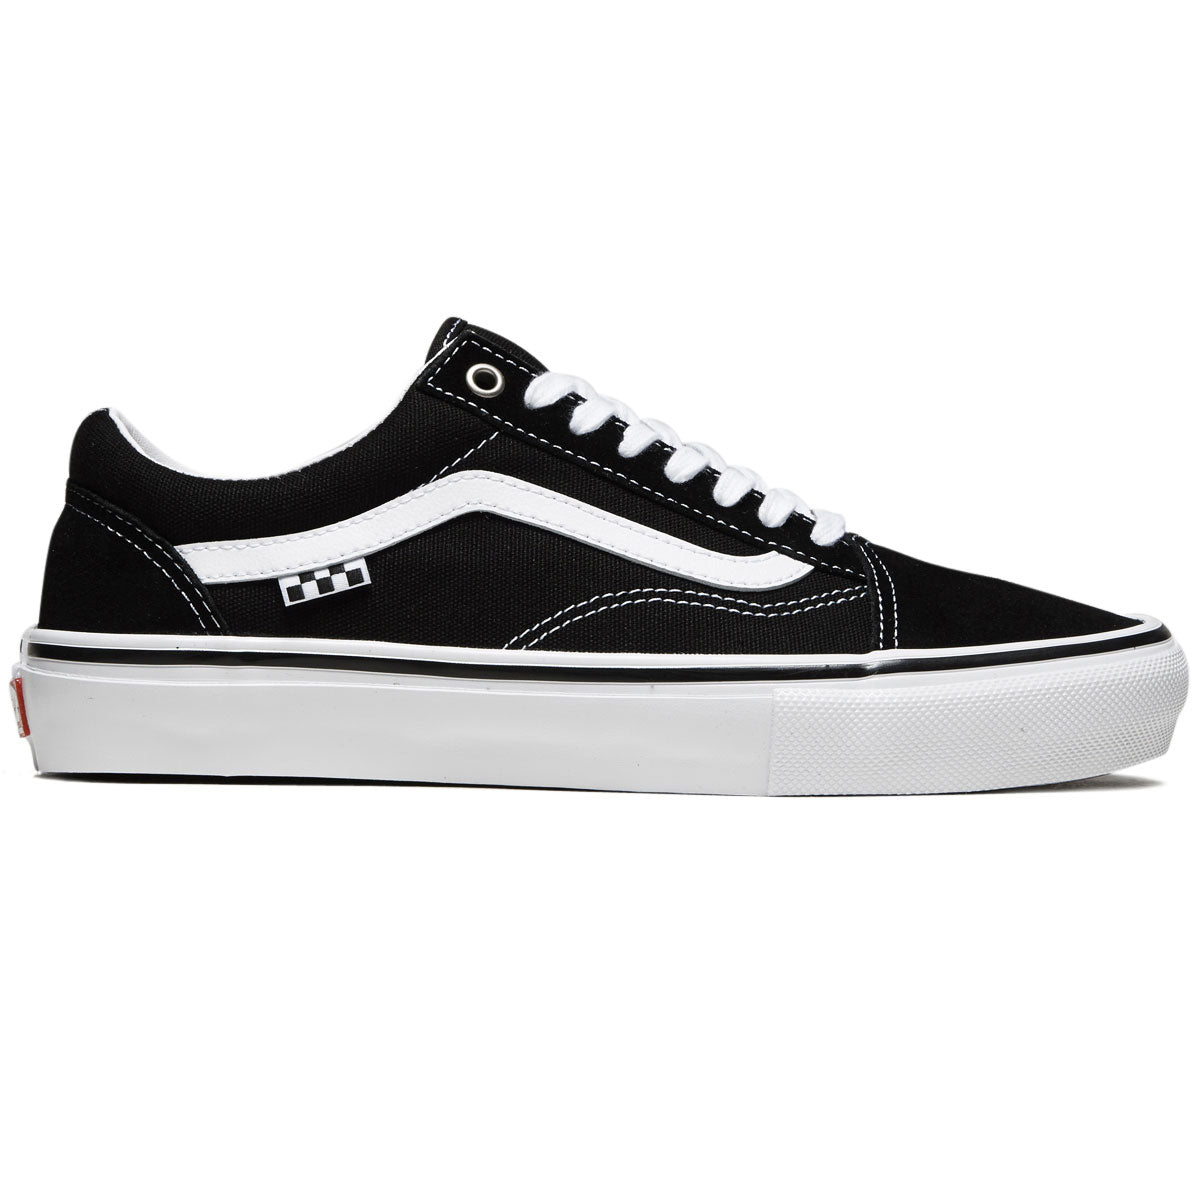 Vans Skate Old Skool Shoes - Black/White image 1